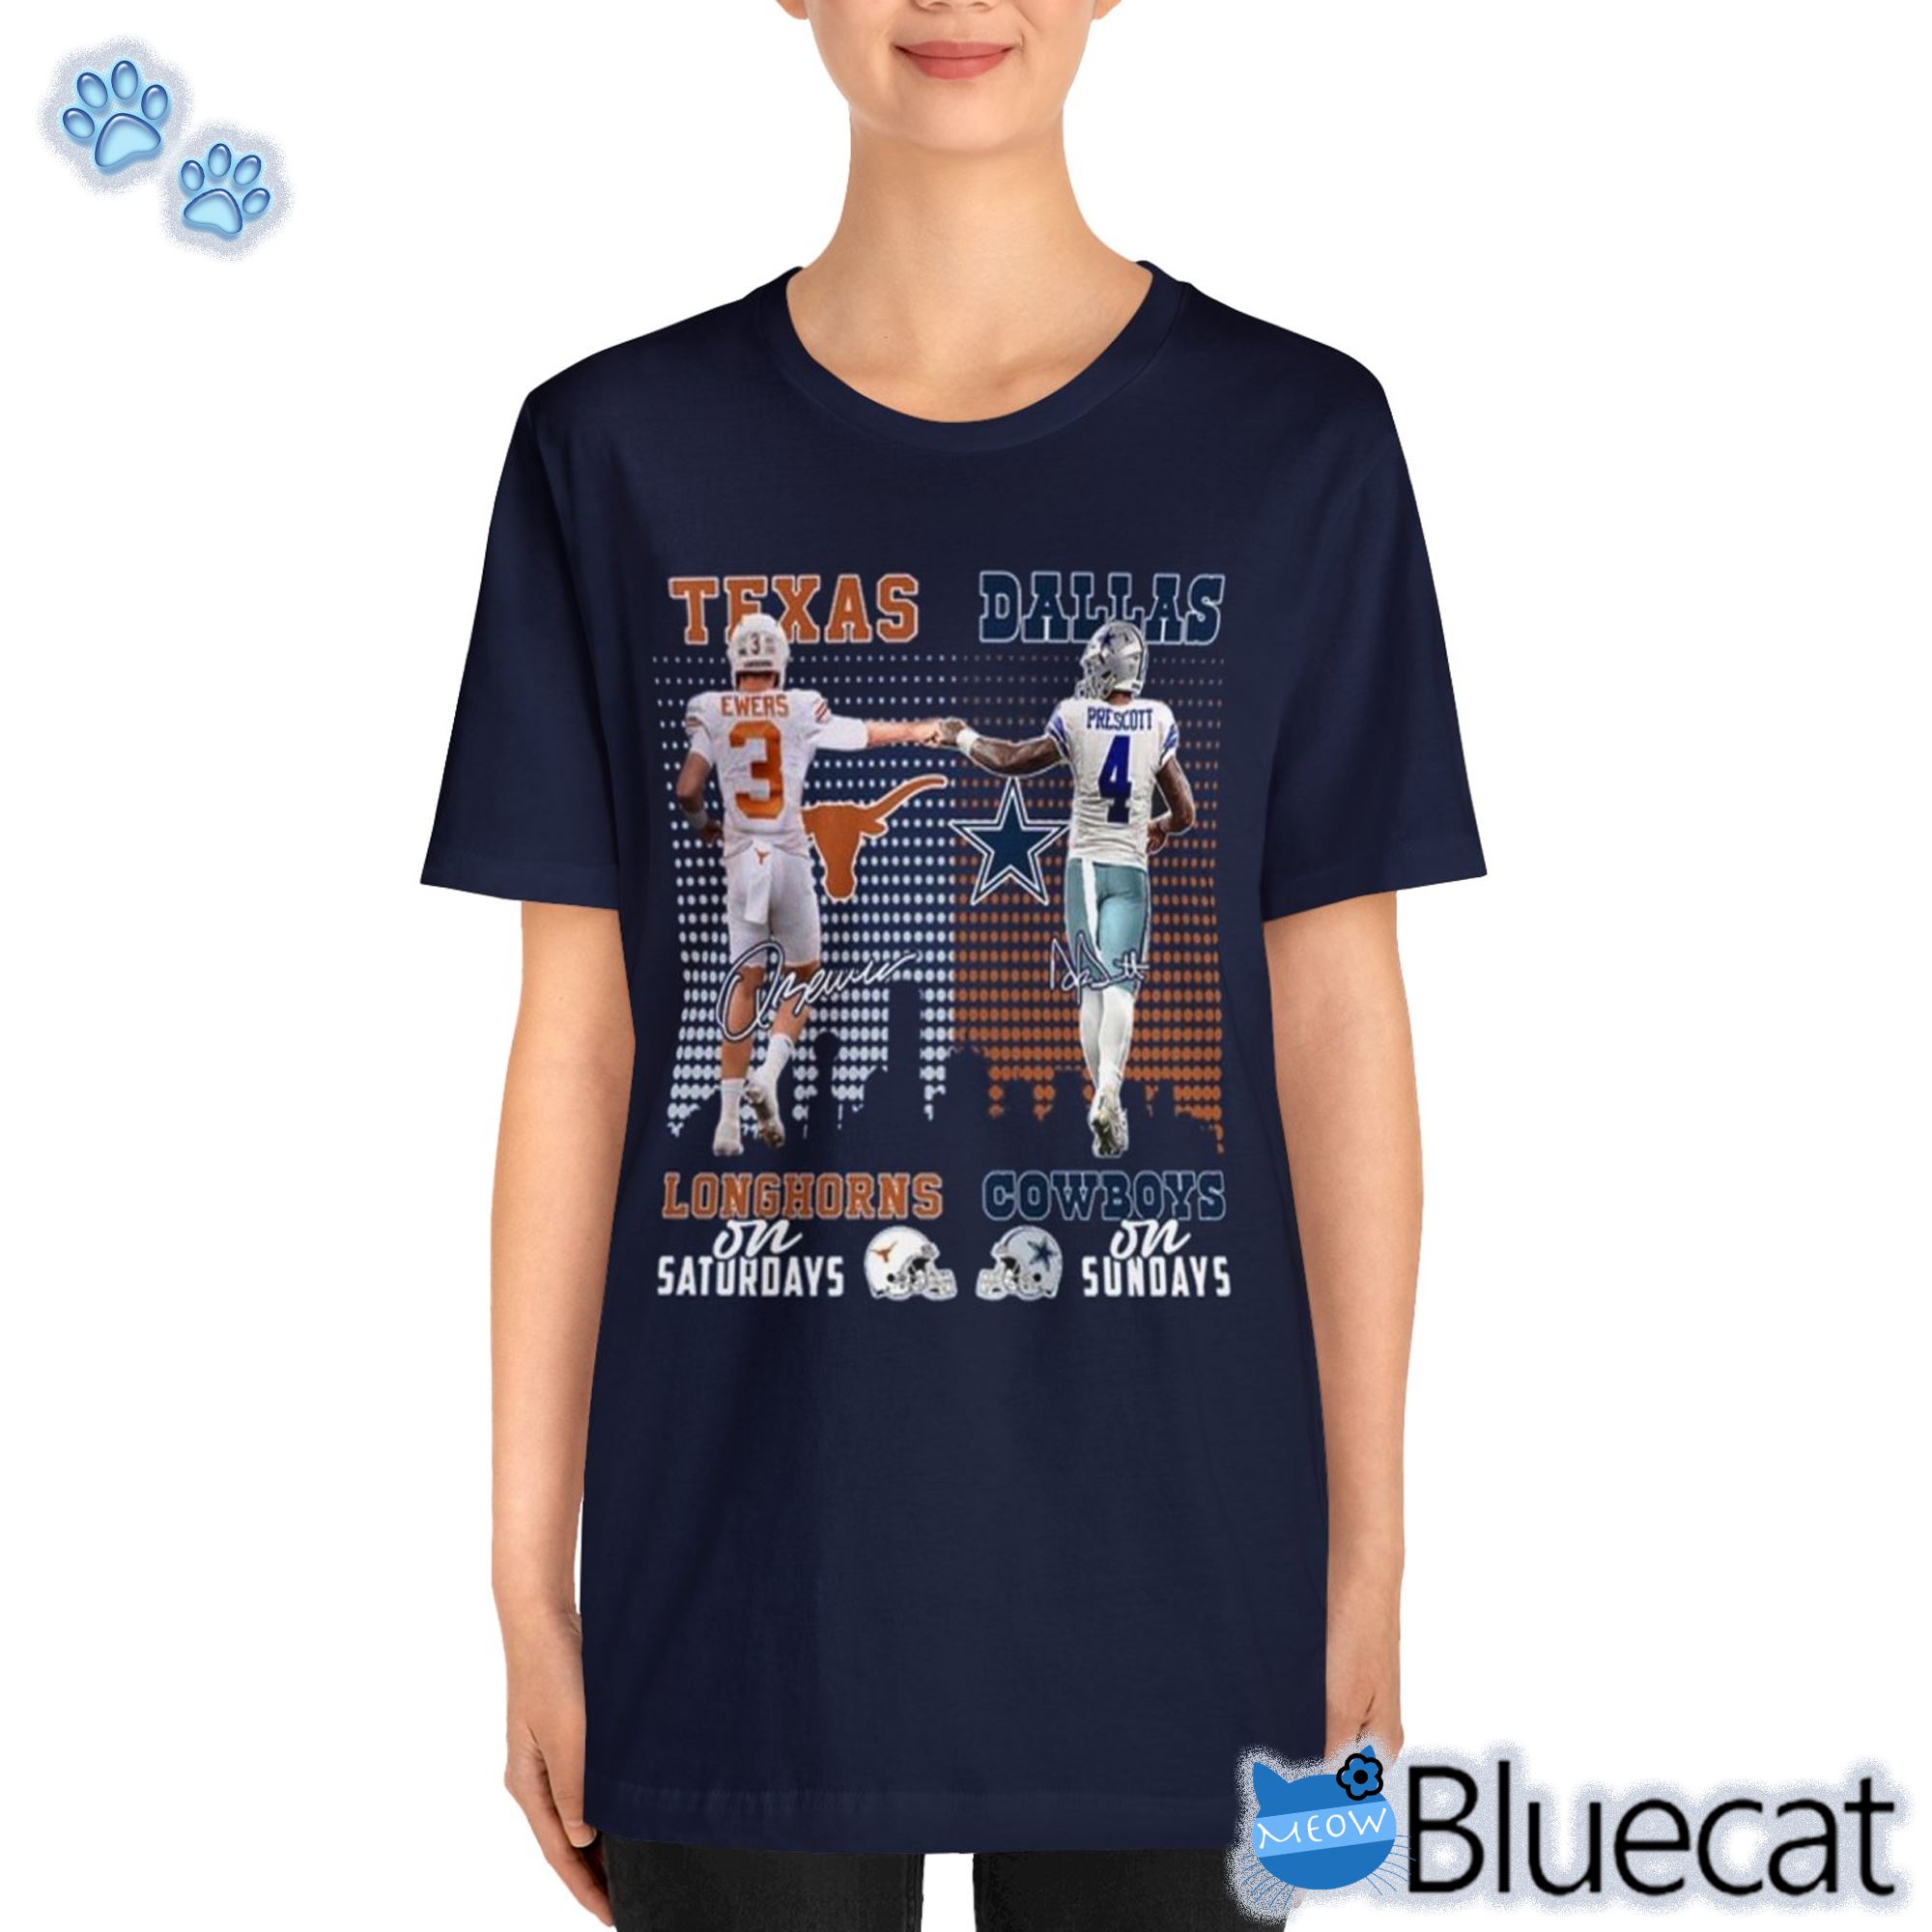 Texas Longhorns On Saturdays And Dallas Cowboys On Sundays T-shirt Sweatshirt 